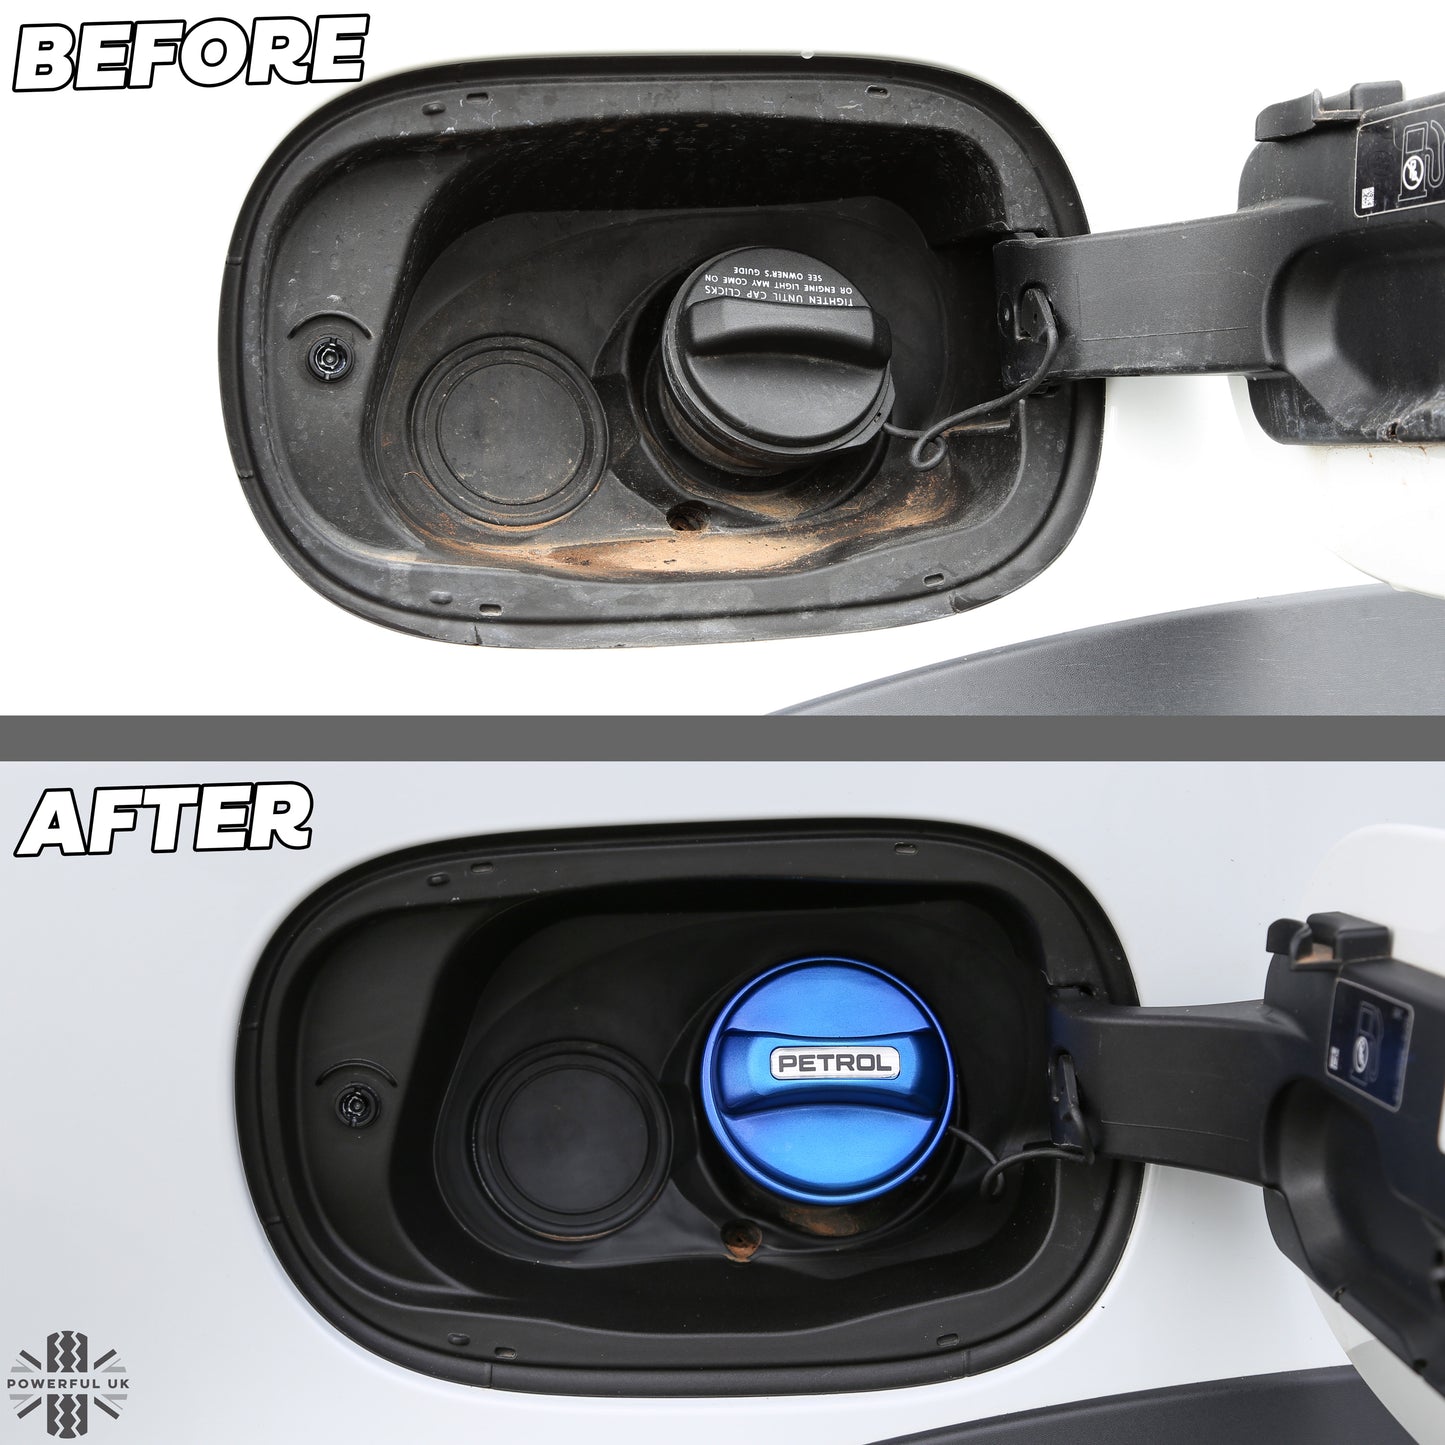 Fuel Filler Cap Cover - Petrol (Vented) - Blue - for Jaguar XF